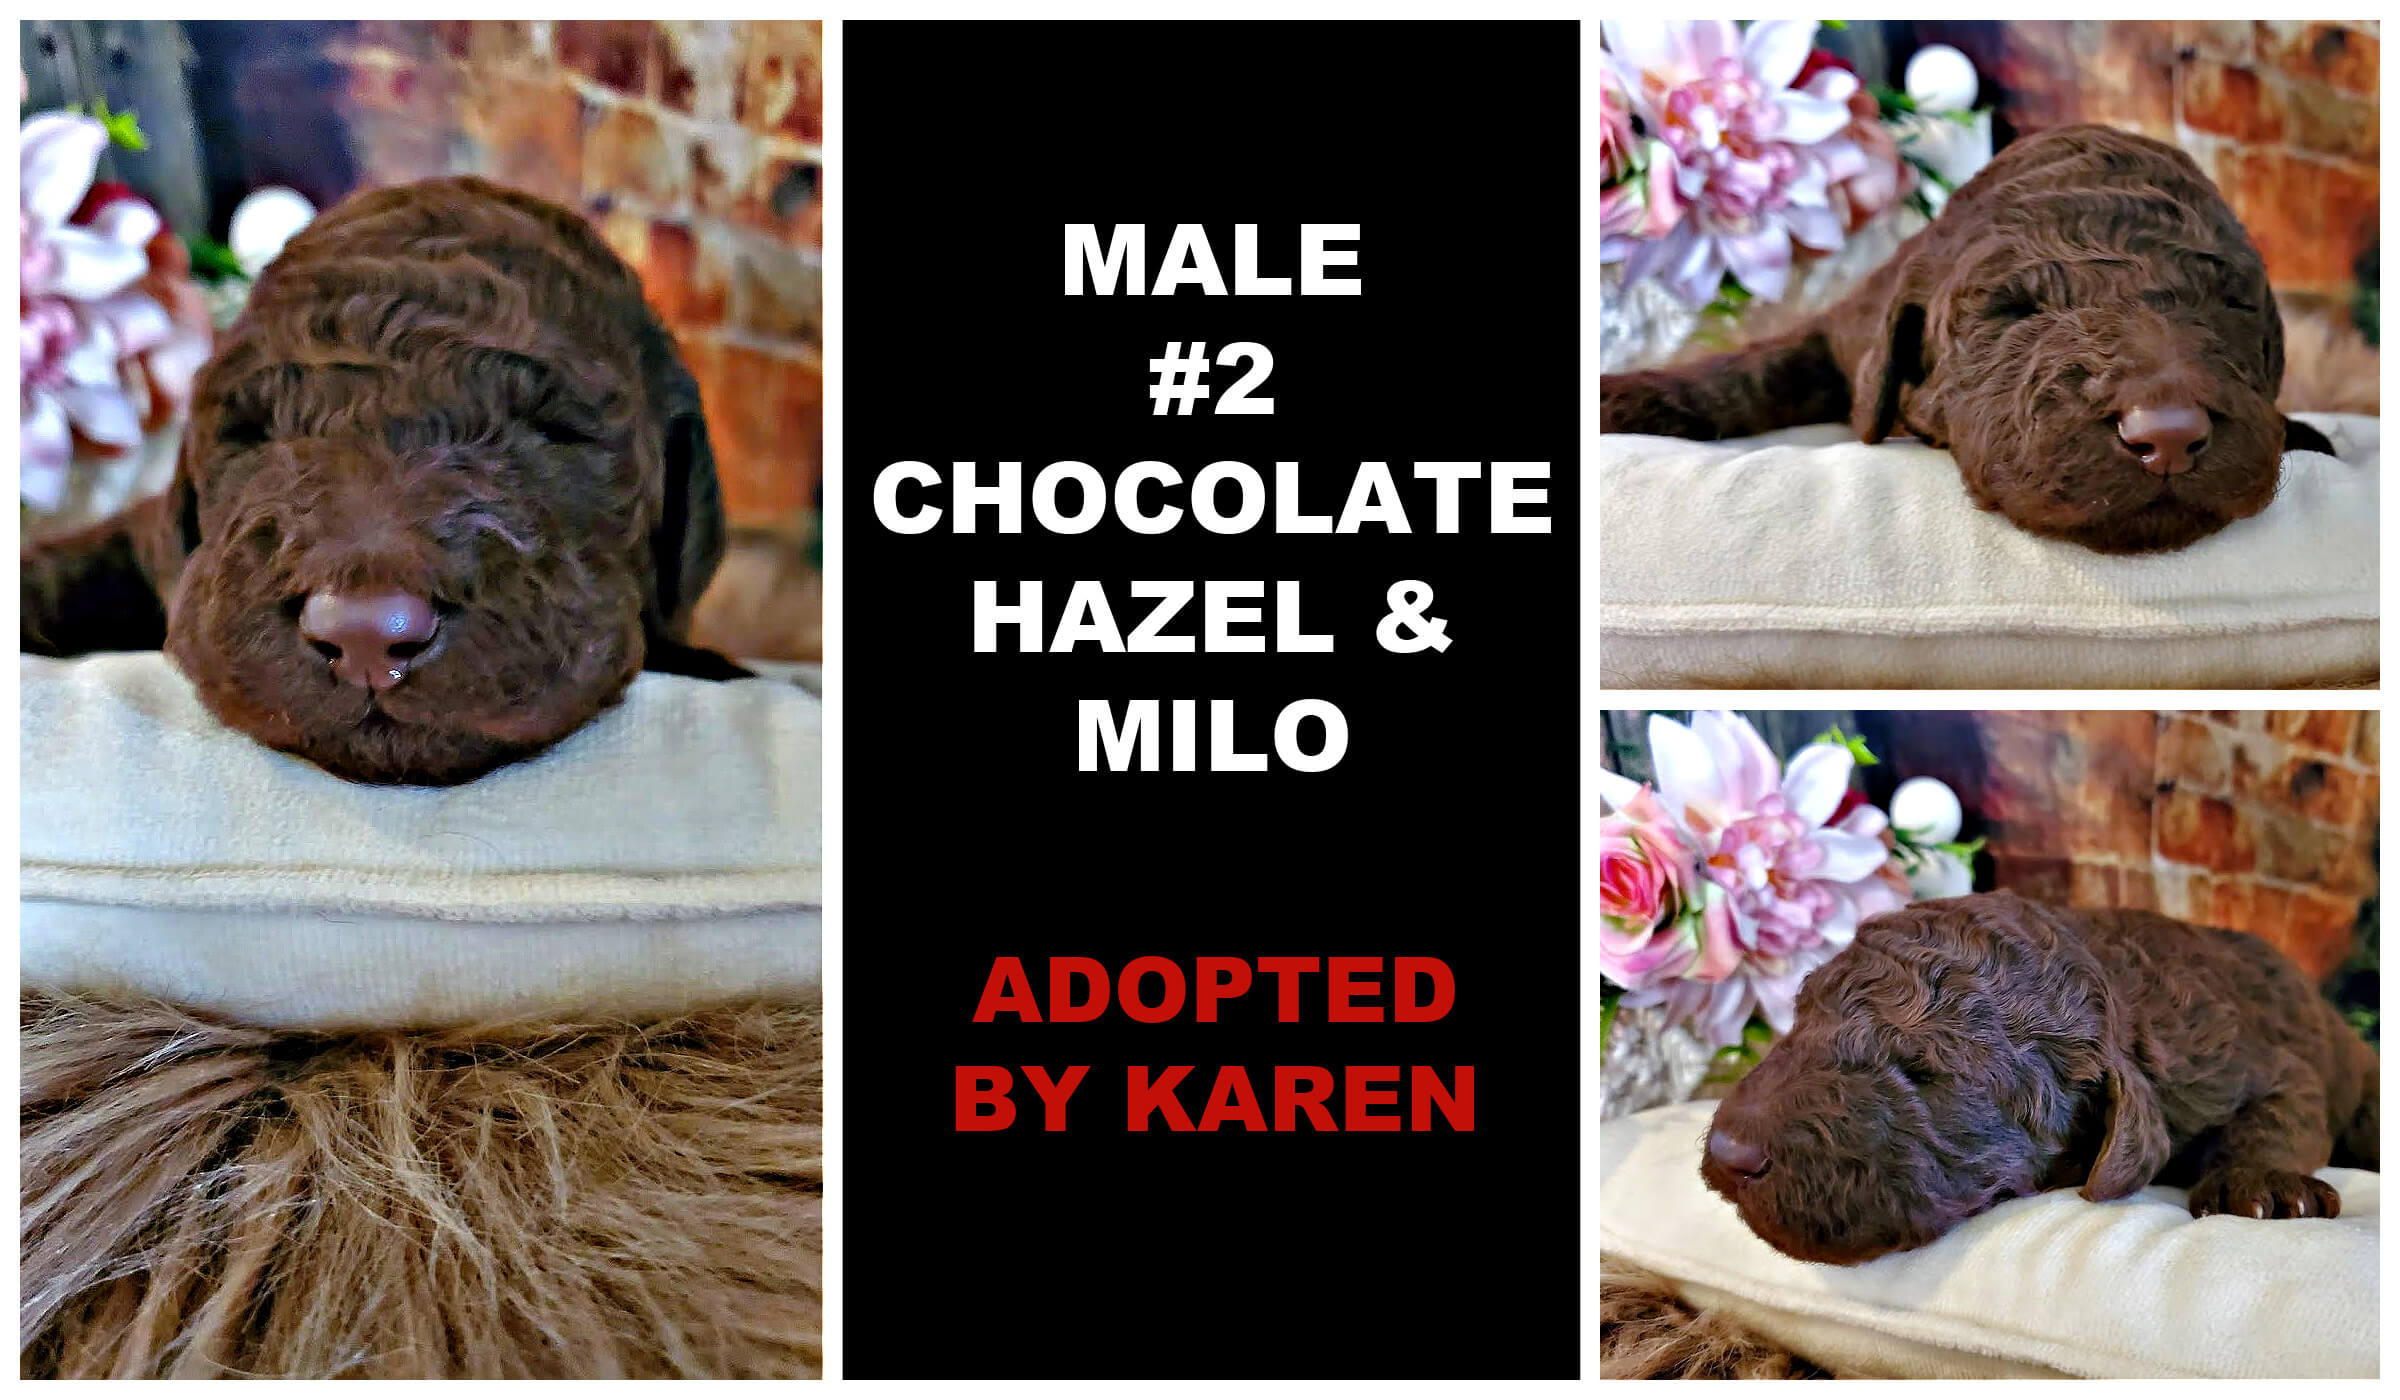 MALE #2 CHOCOLATE HAZEL & MILO